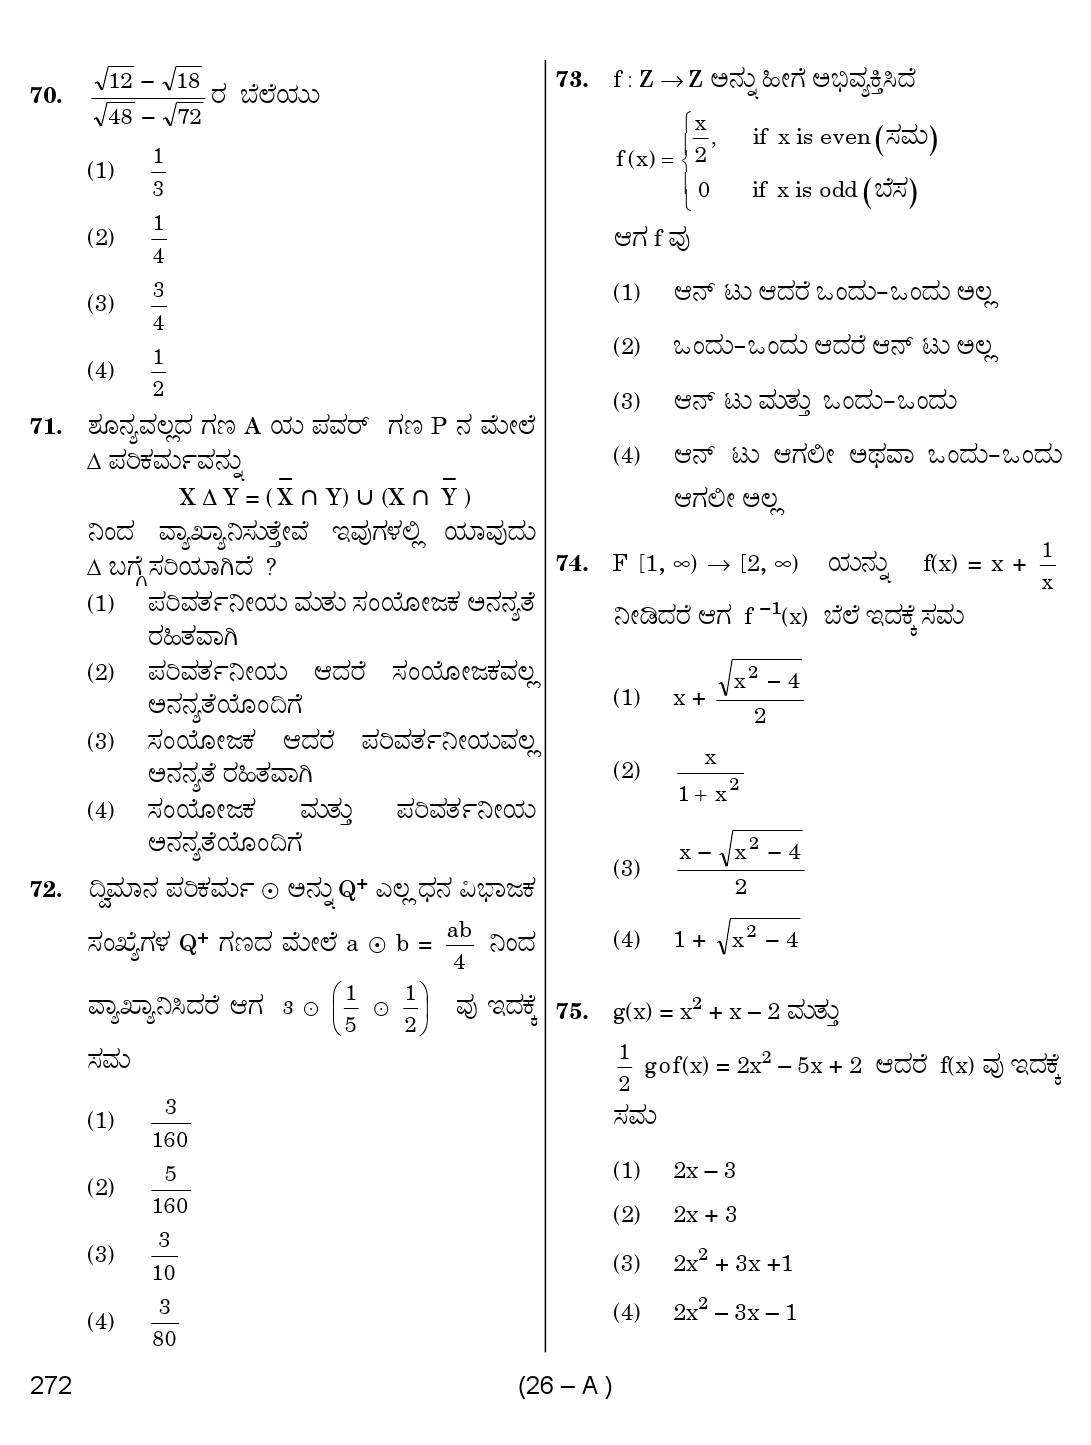 Karnataka PSC Mathematics Teacher Exam Sample Question Paper Subject code 272 26